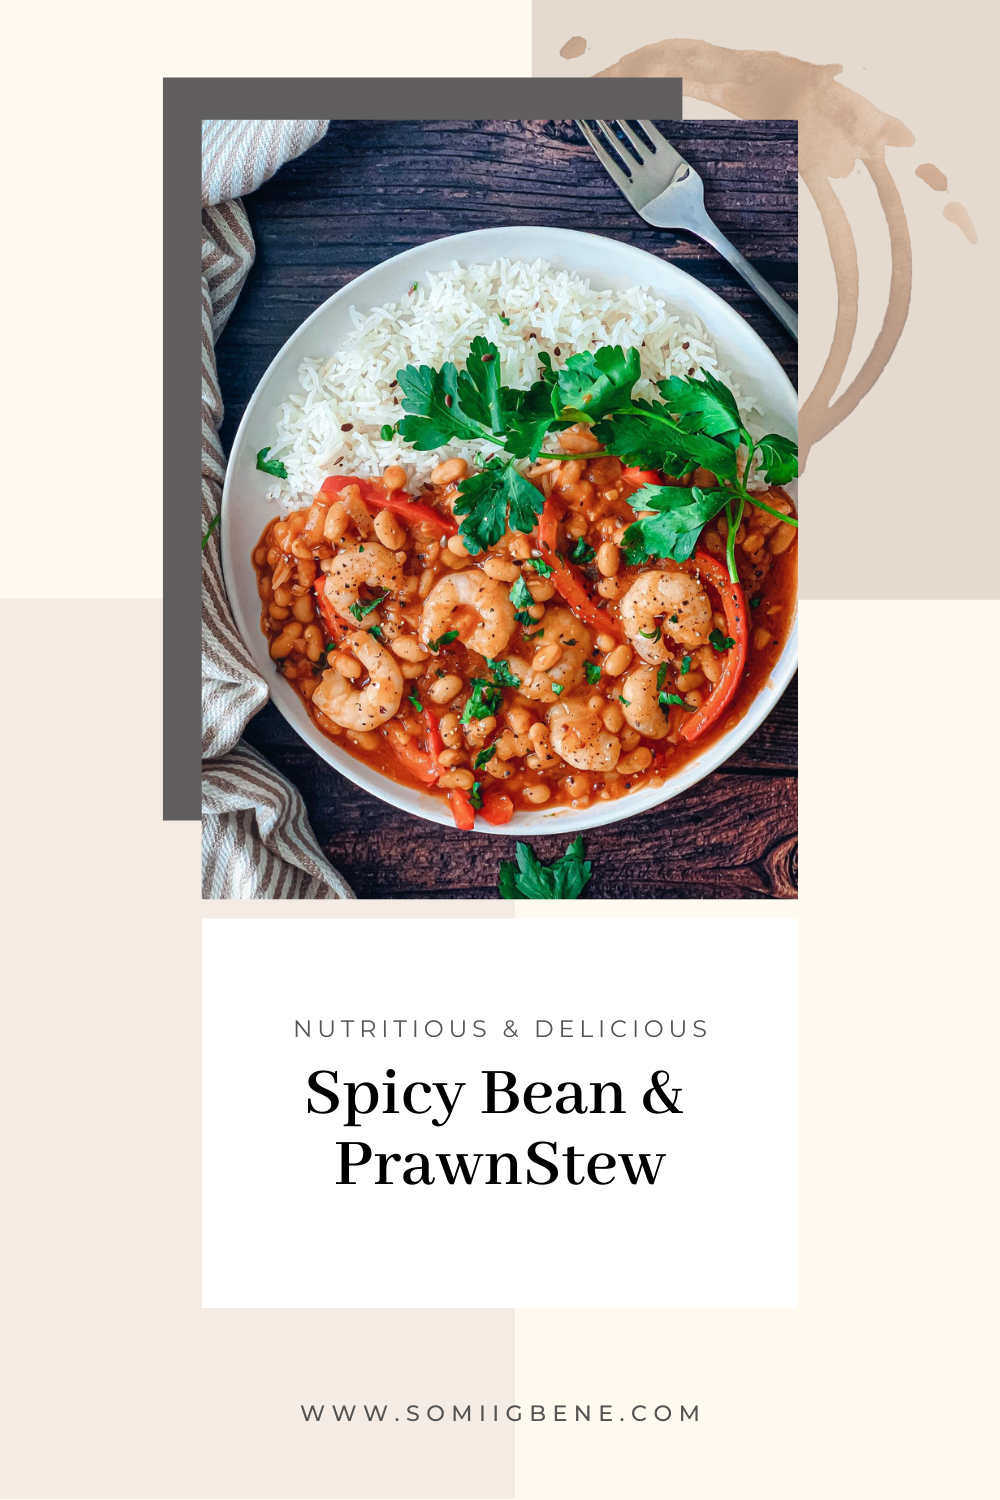 Spicy prawn and bean stew